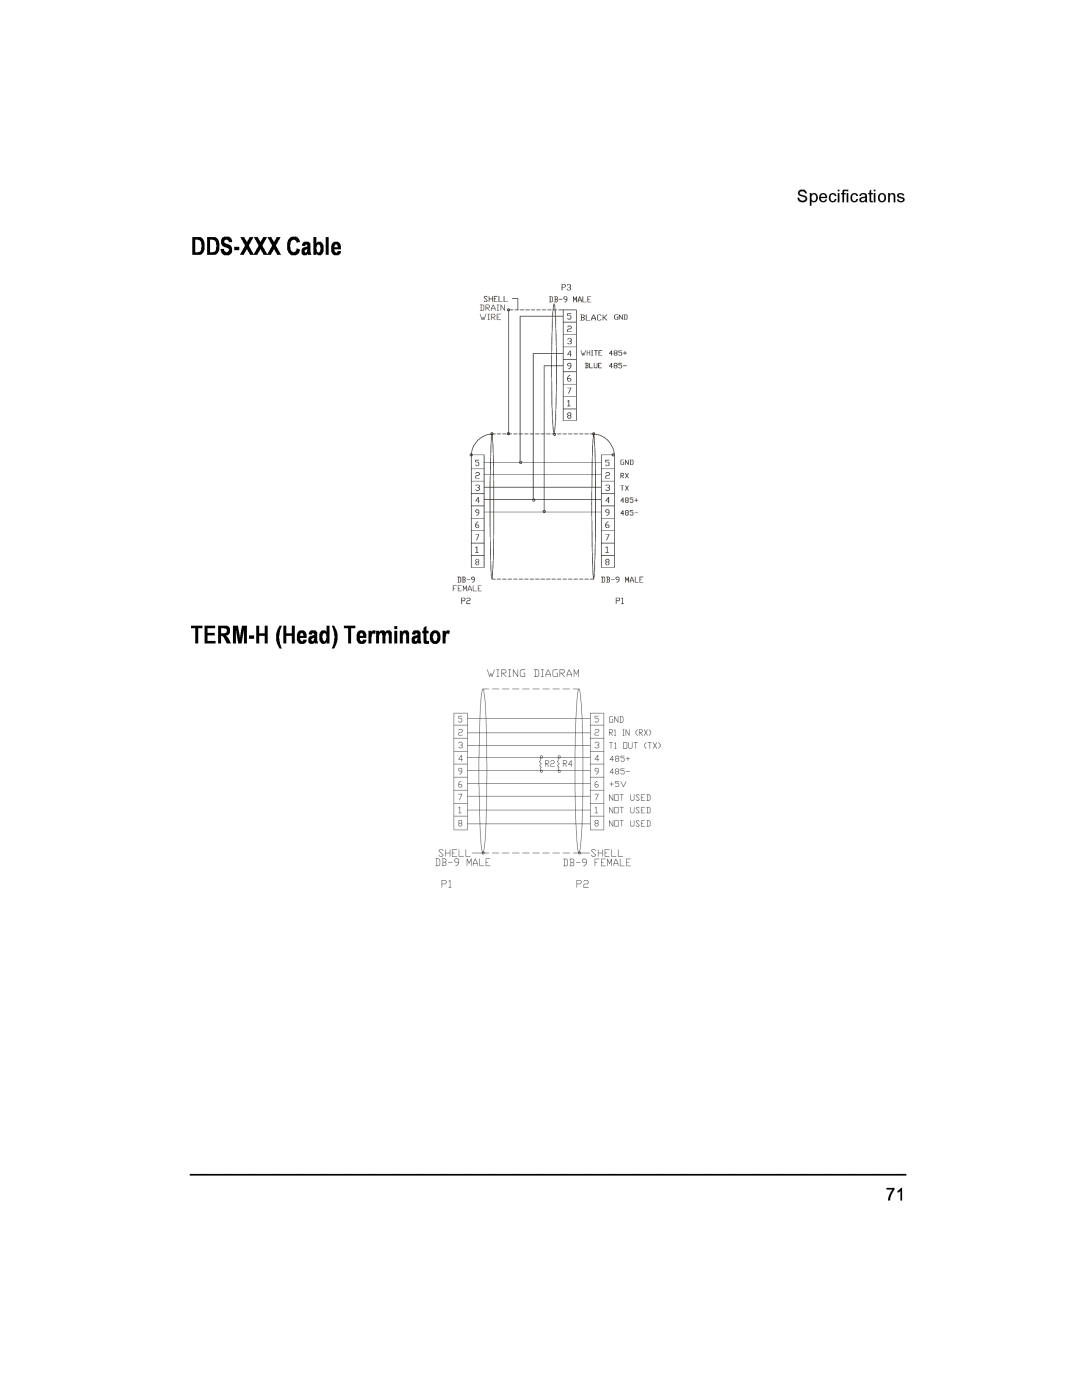 Emerson Epsilon Eb Digital Servo Drive, 400501-05 installation manual DDS-XXX Cable TERM-H Head Terminator, Specifications 